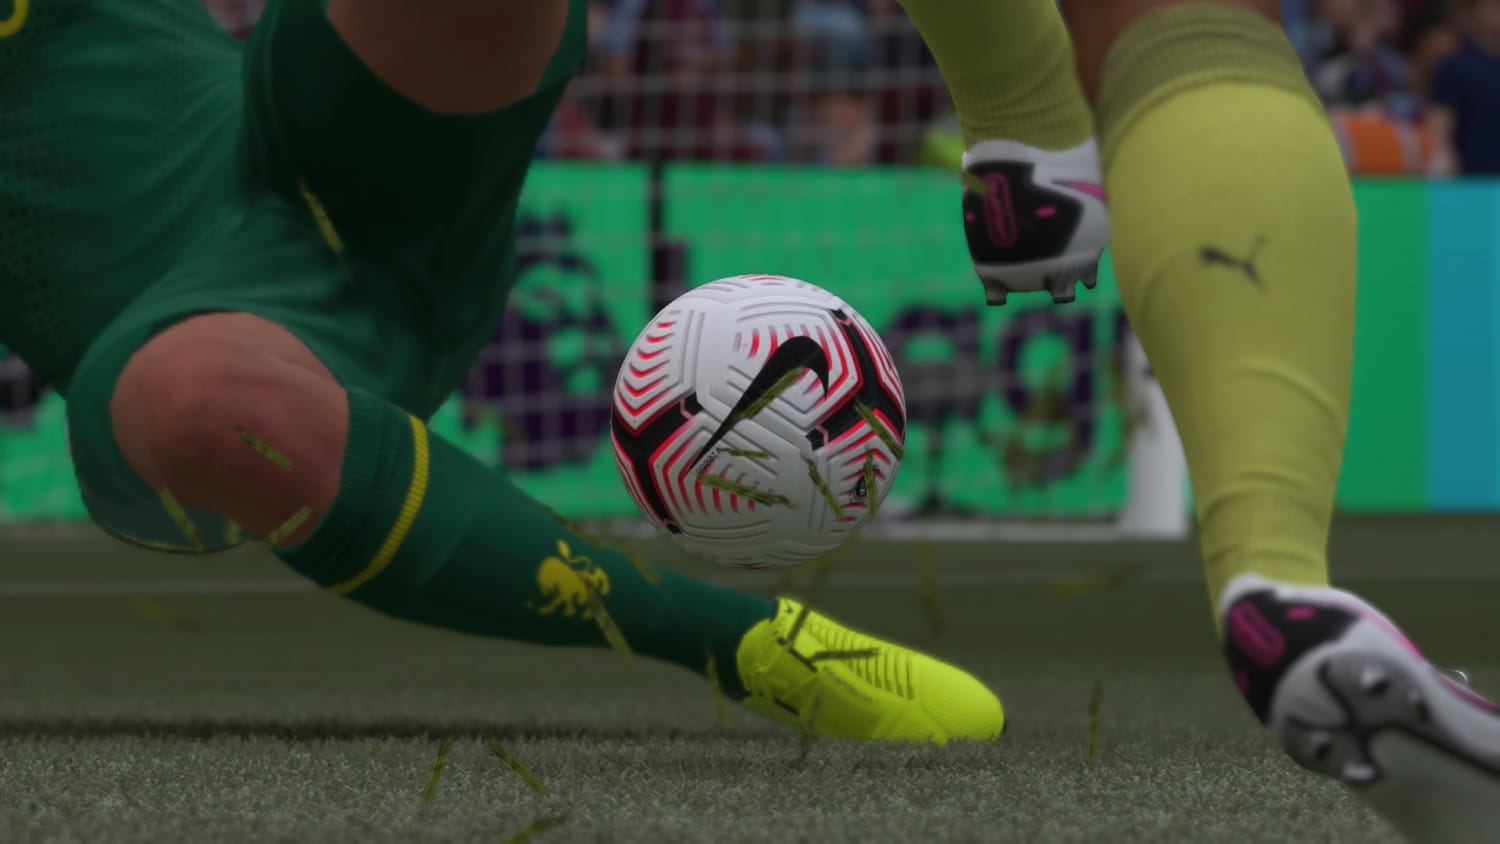 FIFA 21 vs FIFA 20: saiba o que muda nos jogos de futebol da EA Sports